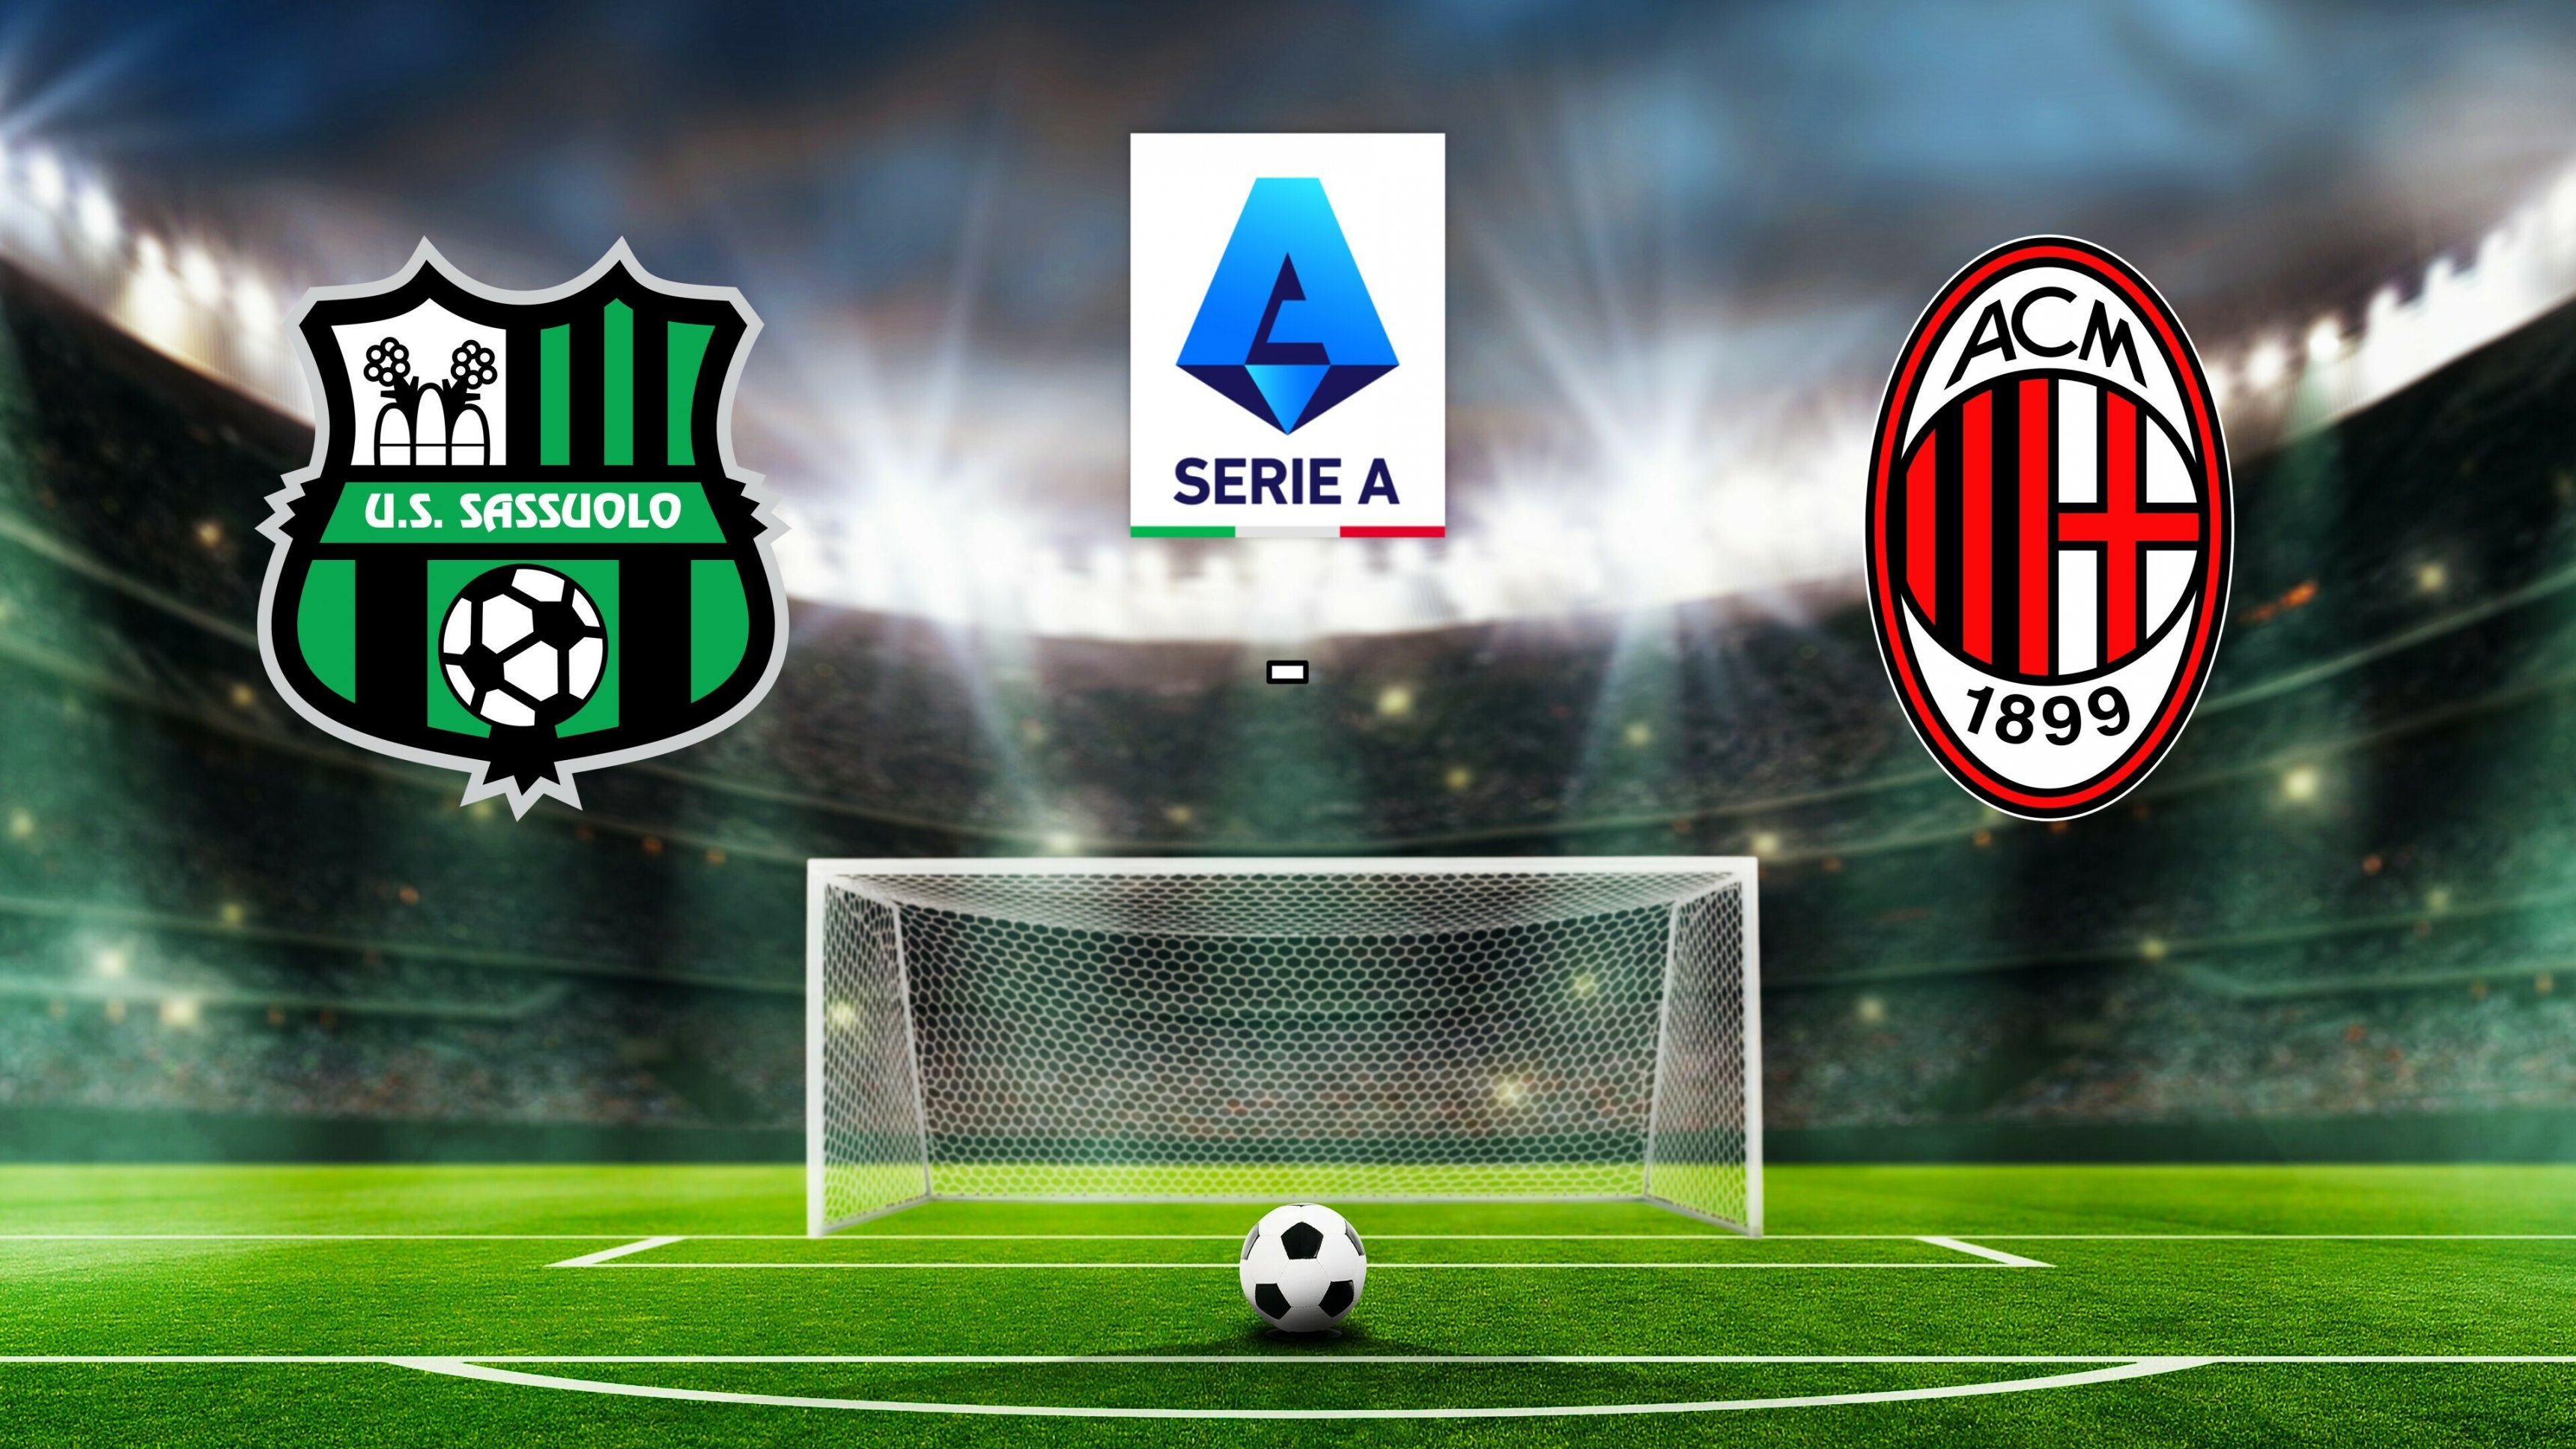 U.S. Sassuolo Calcio - AC Milan